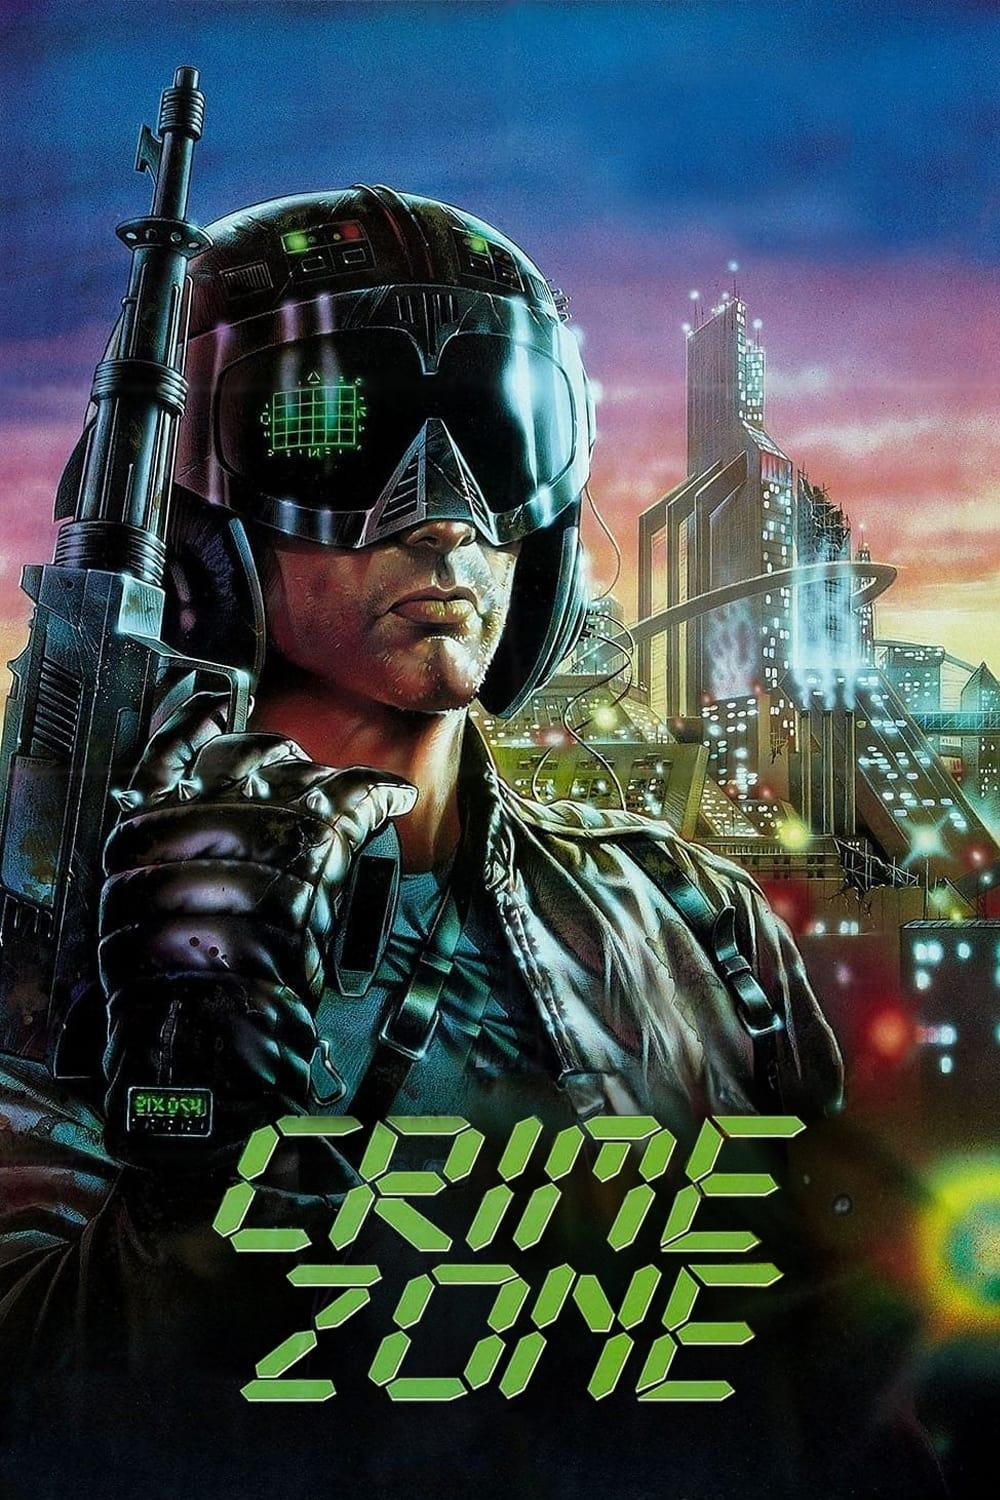 Crime Zone poster